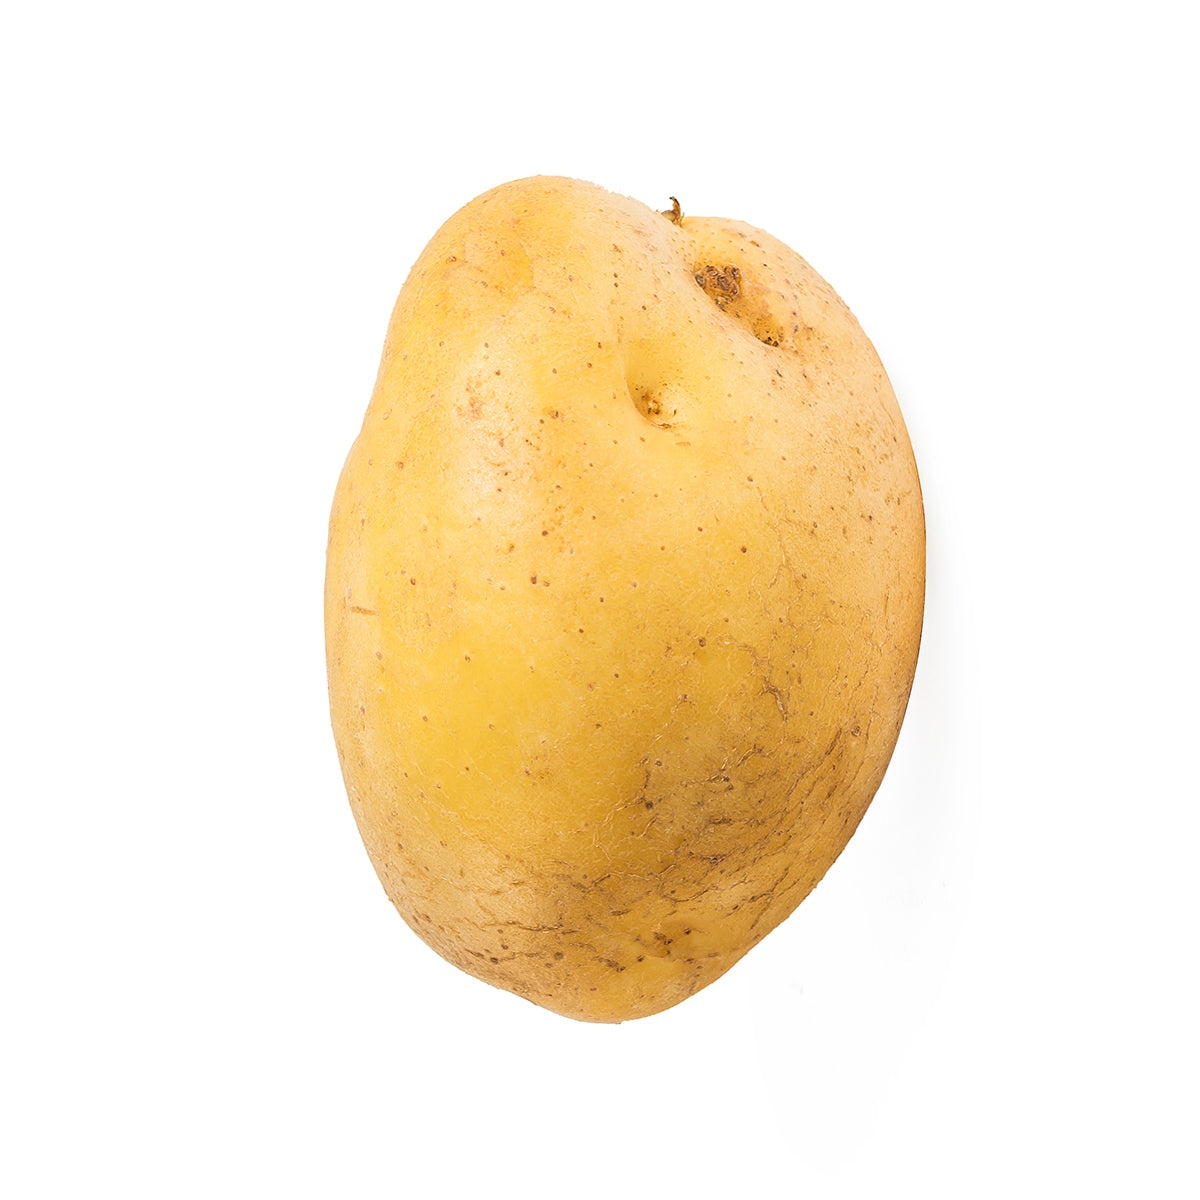 Yellow Potatoes - 5 lbs